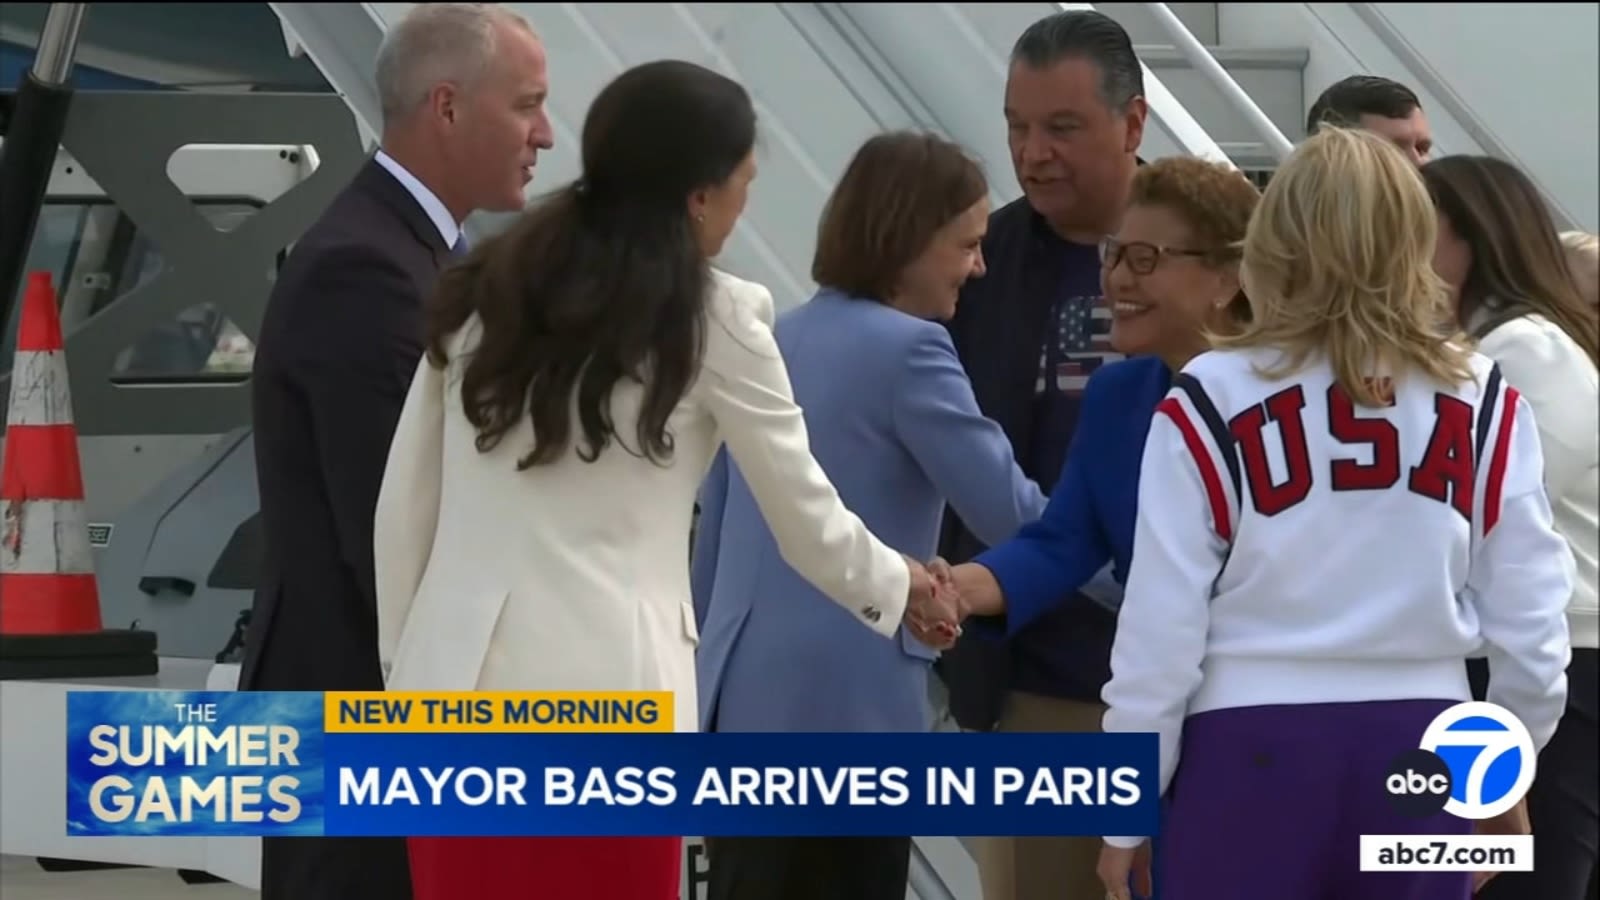 Mayor Karen Bass, first lady Jill Biden arrive in Paris as part of Olympics delegation